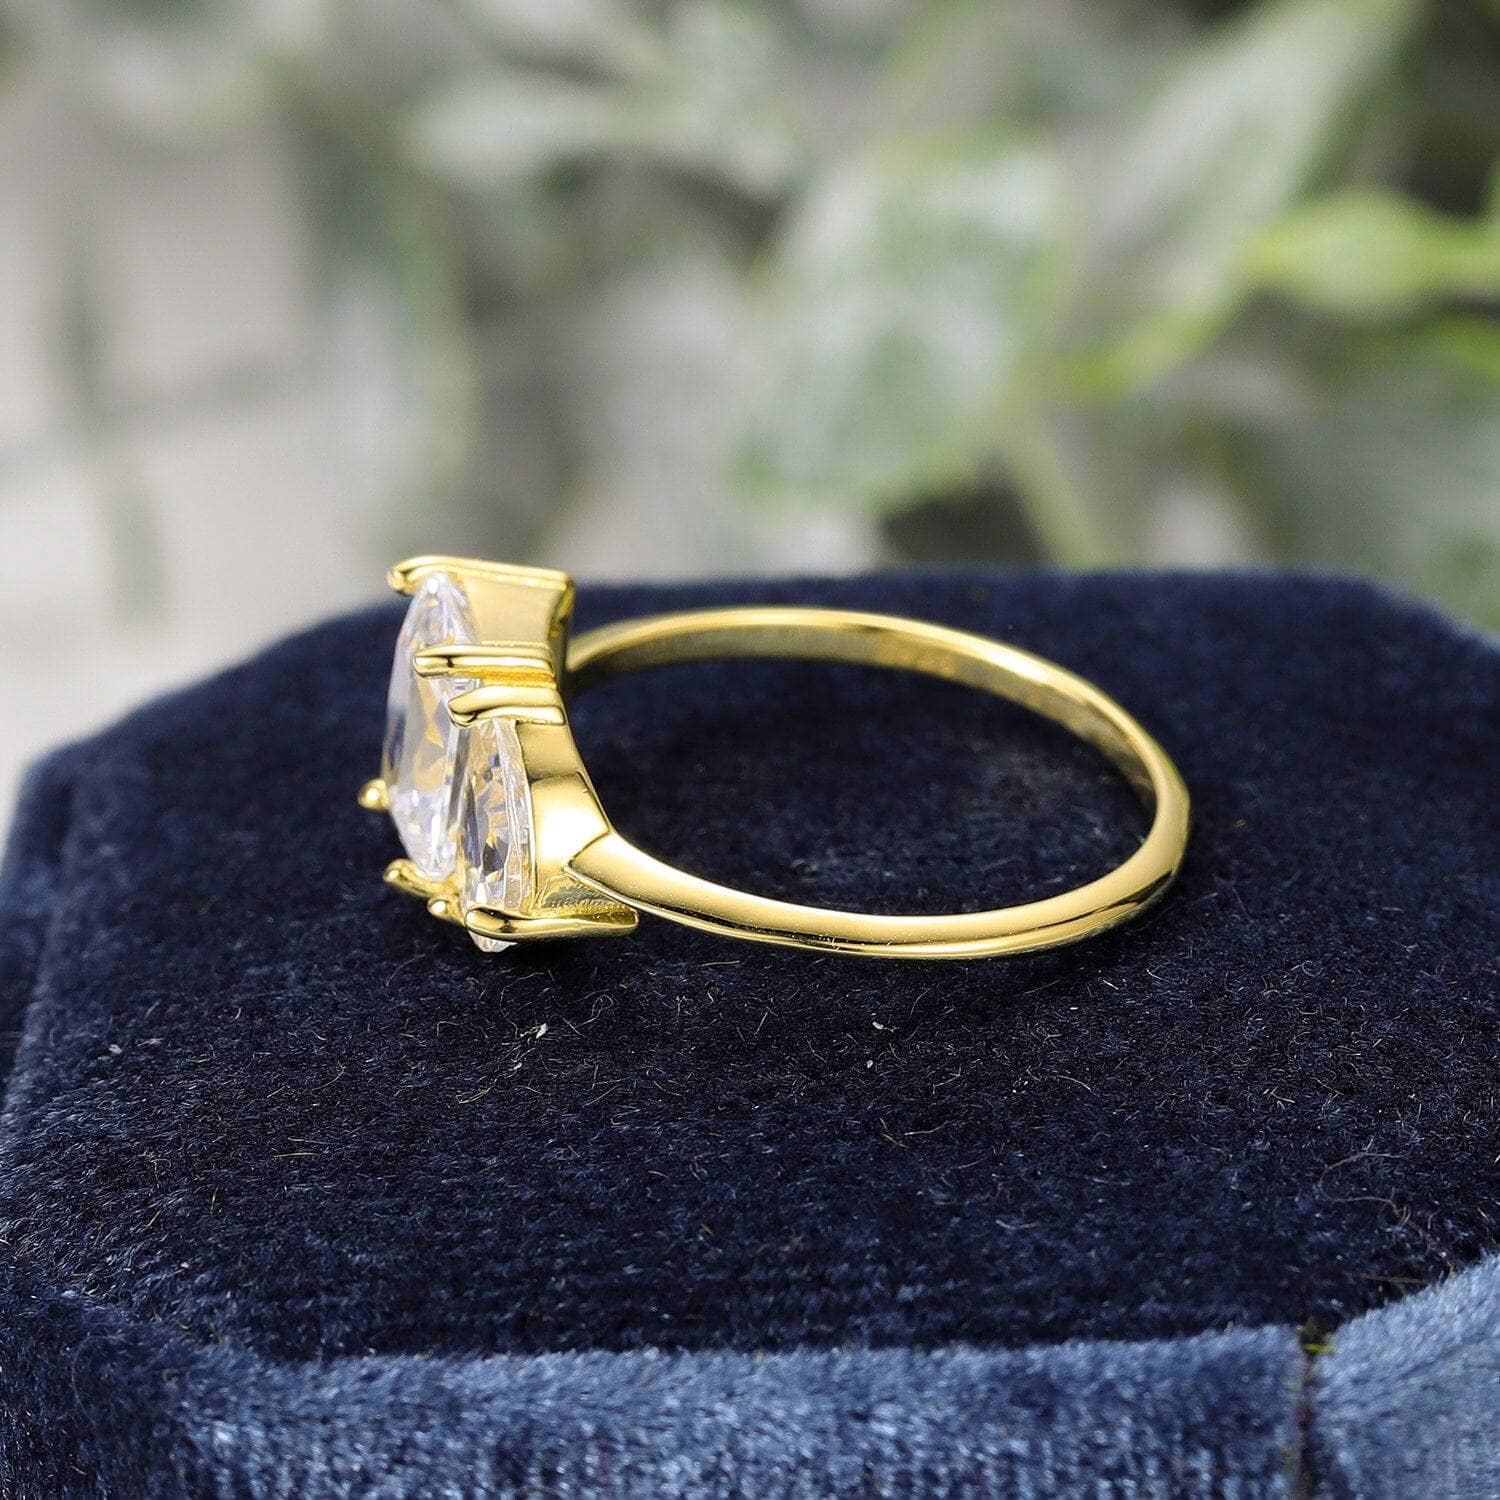 2.8 Carat Diamond Engagement Ring, 14K White Gold, Round